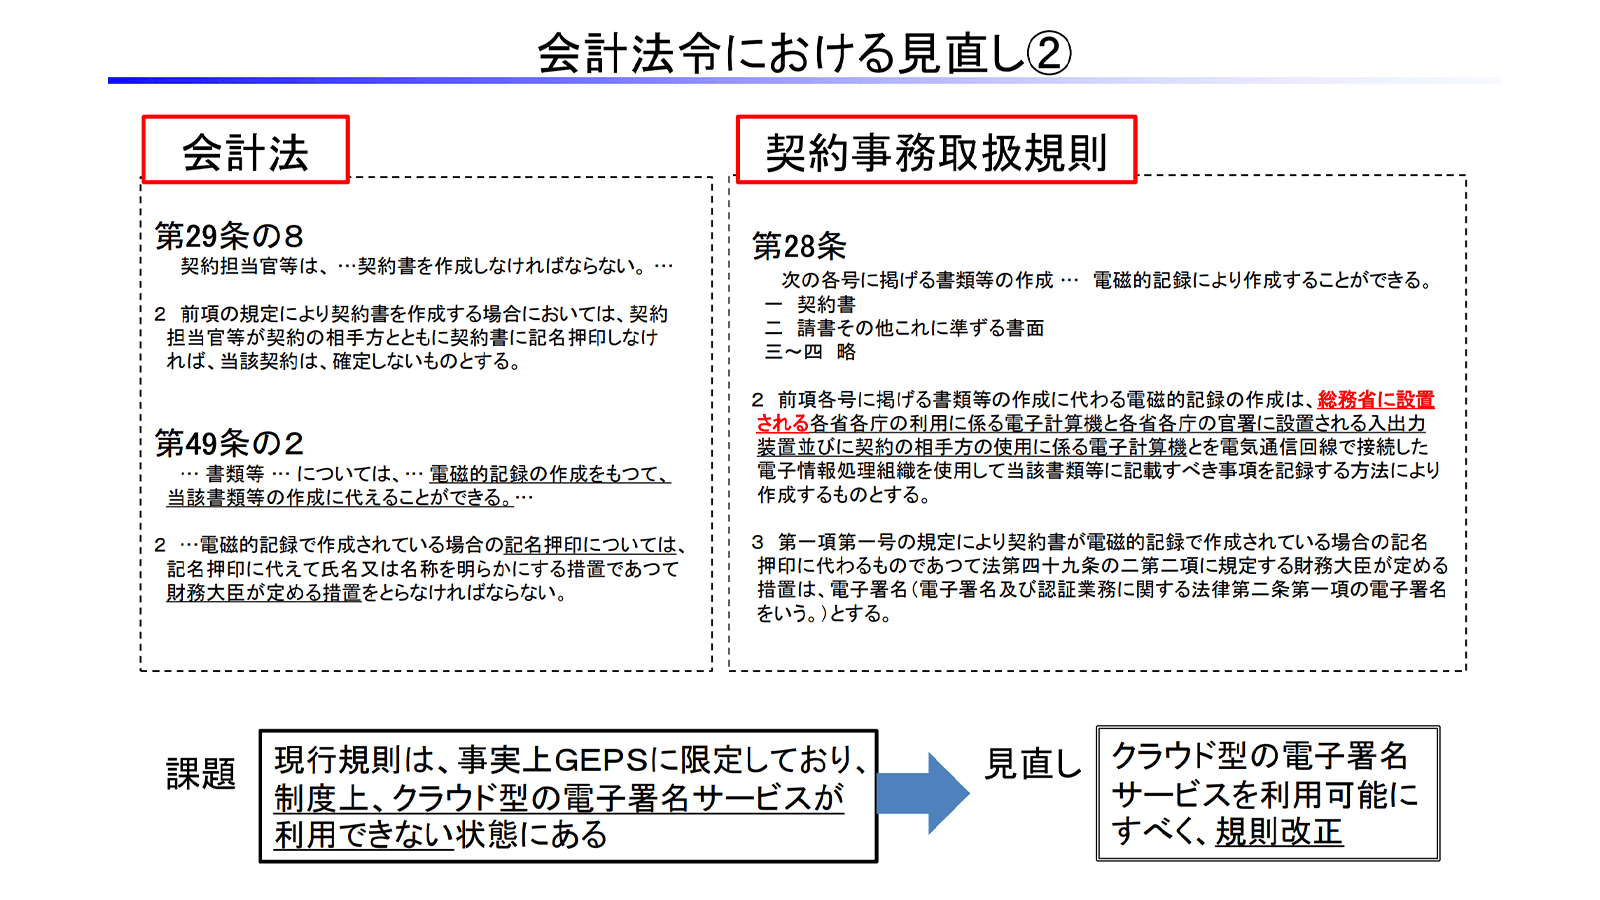 https://www8.cao.go.jp/kisei-kaikaku/kisei/meeting/wg/digital/20201117/201117digital05.pdf 2020年11月24日最終アクセス